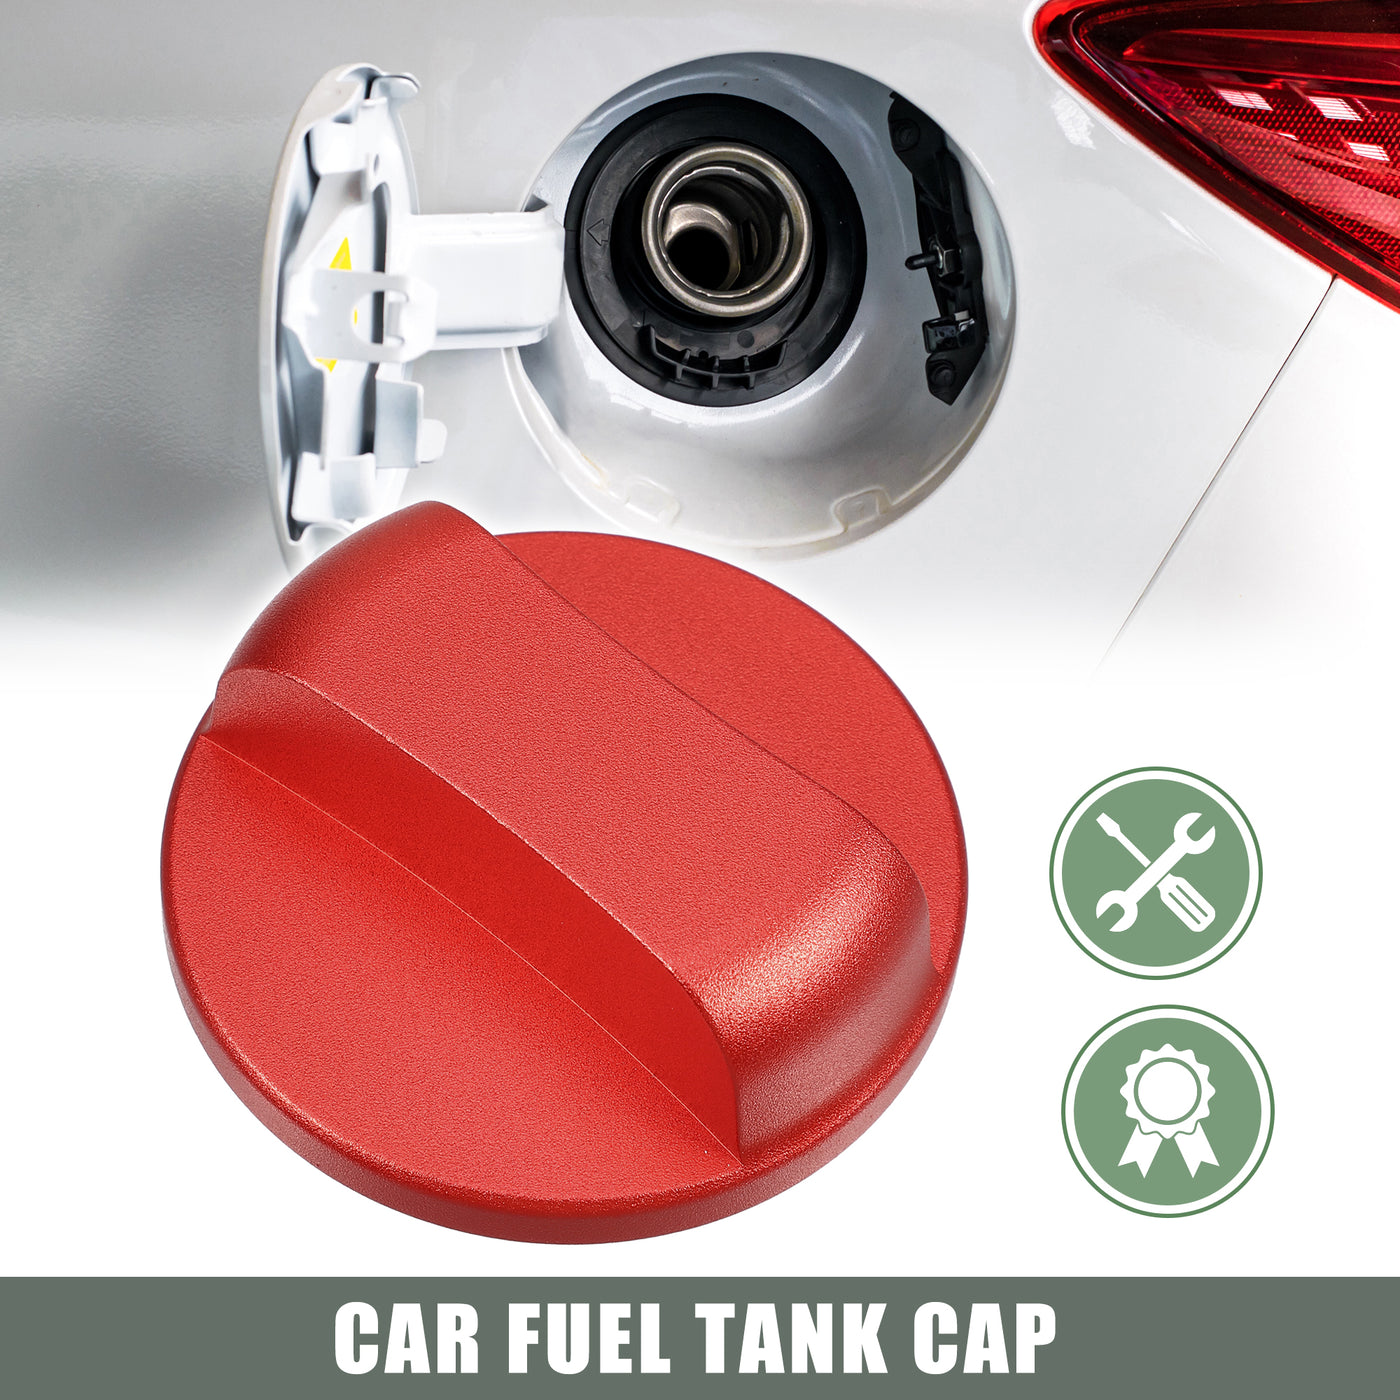 X AUTOHAUX Car Auto Fuel Tank Filler Cover Door Gas Tank Cap for Nissan Red Aluminum Alloy